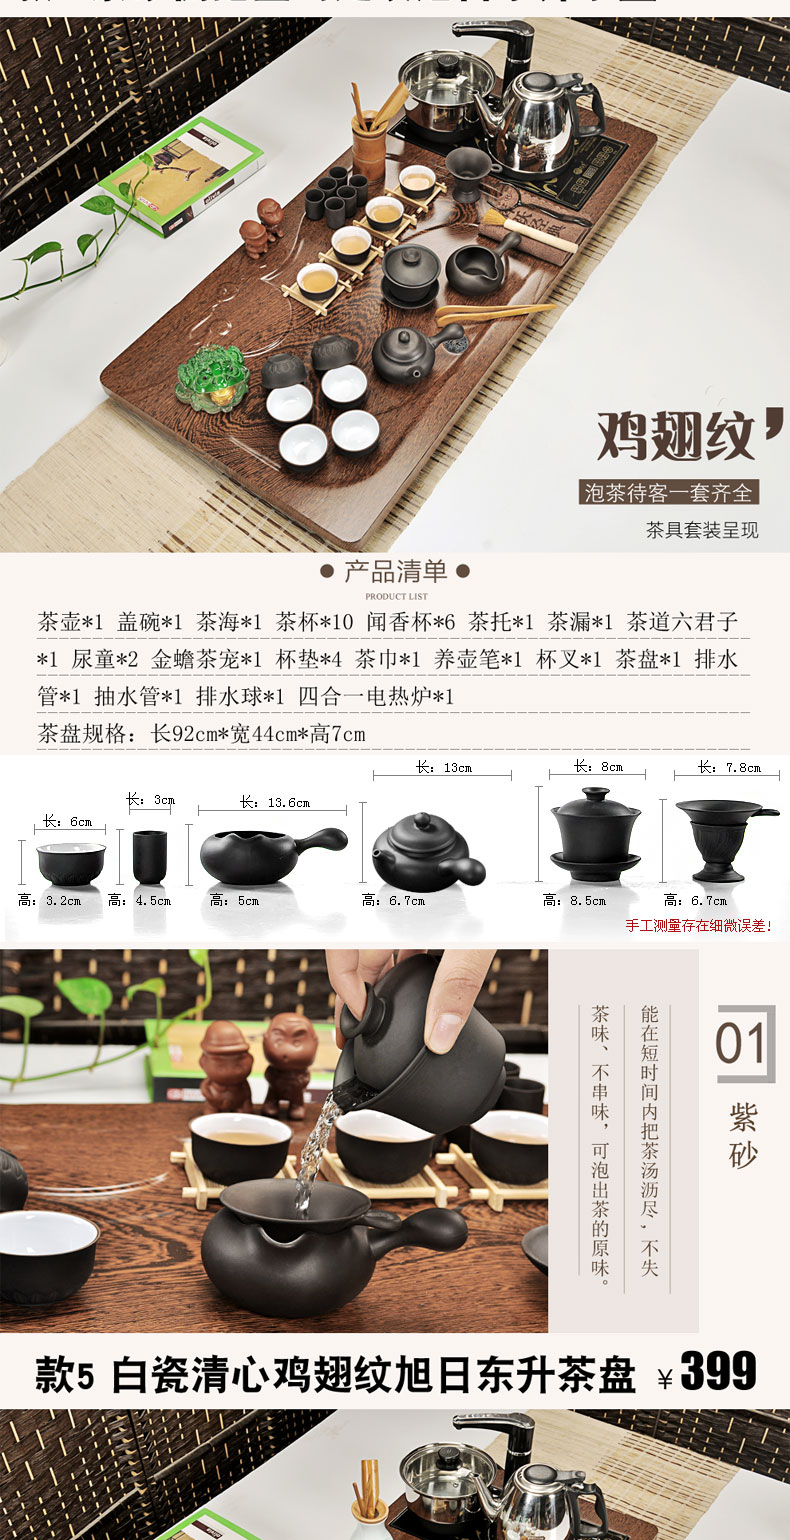 Hui, make tea set contracted tea service of a complete set of violet arenaceous kung fu tea tea set ceramic induction cooker solid wood tea tray